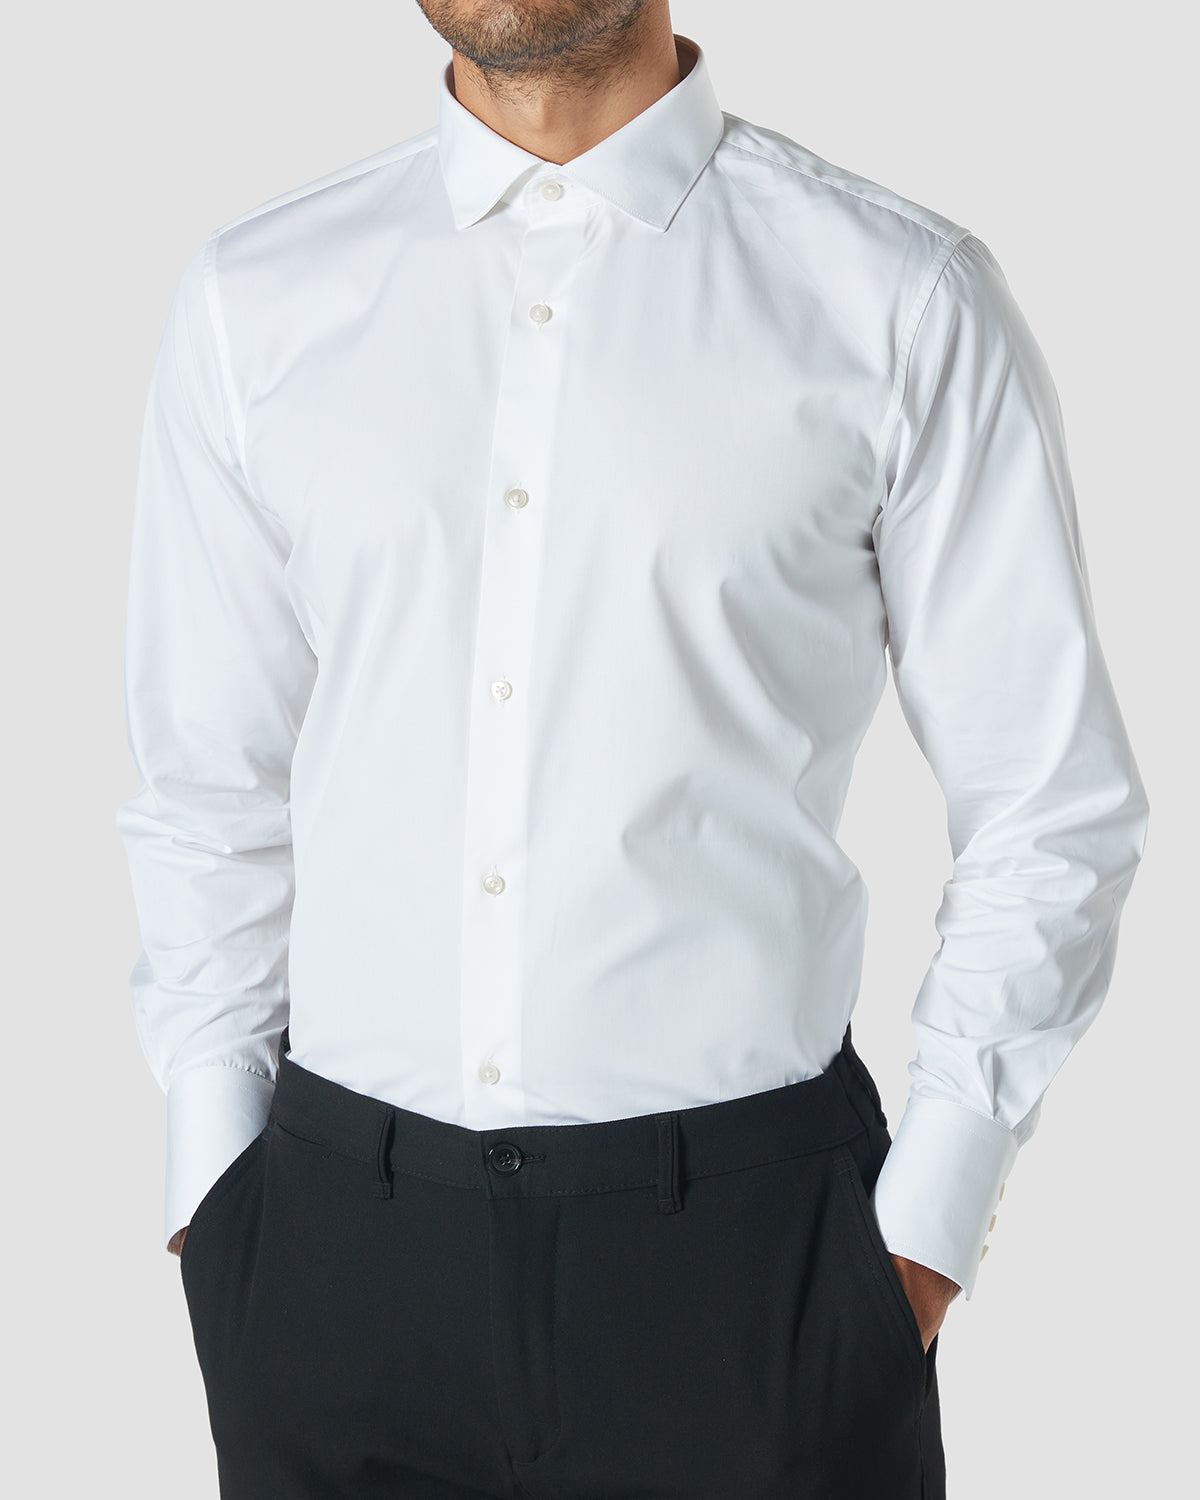 Soktas Ice White 3-button Cuff Shirt